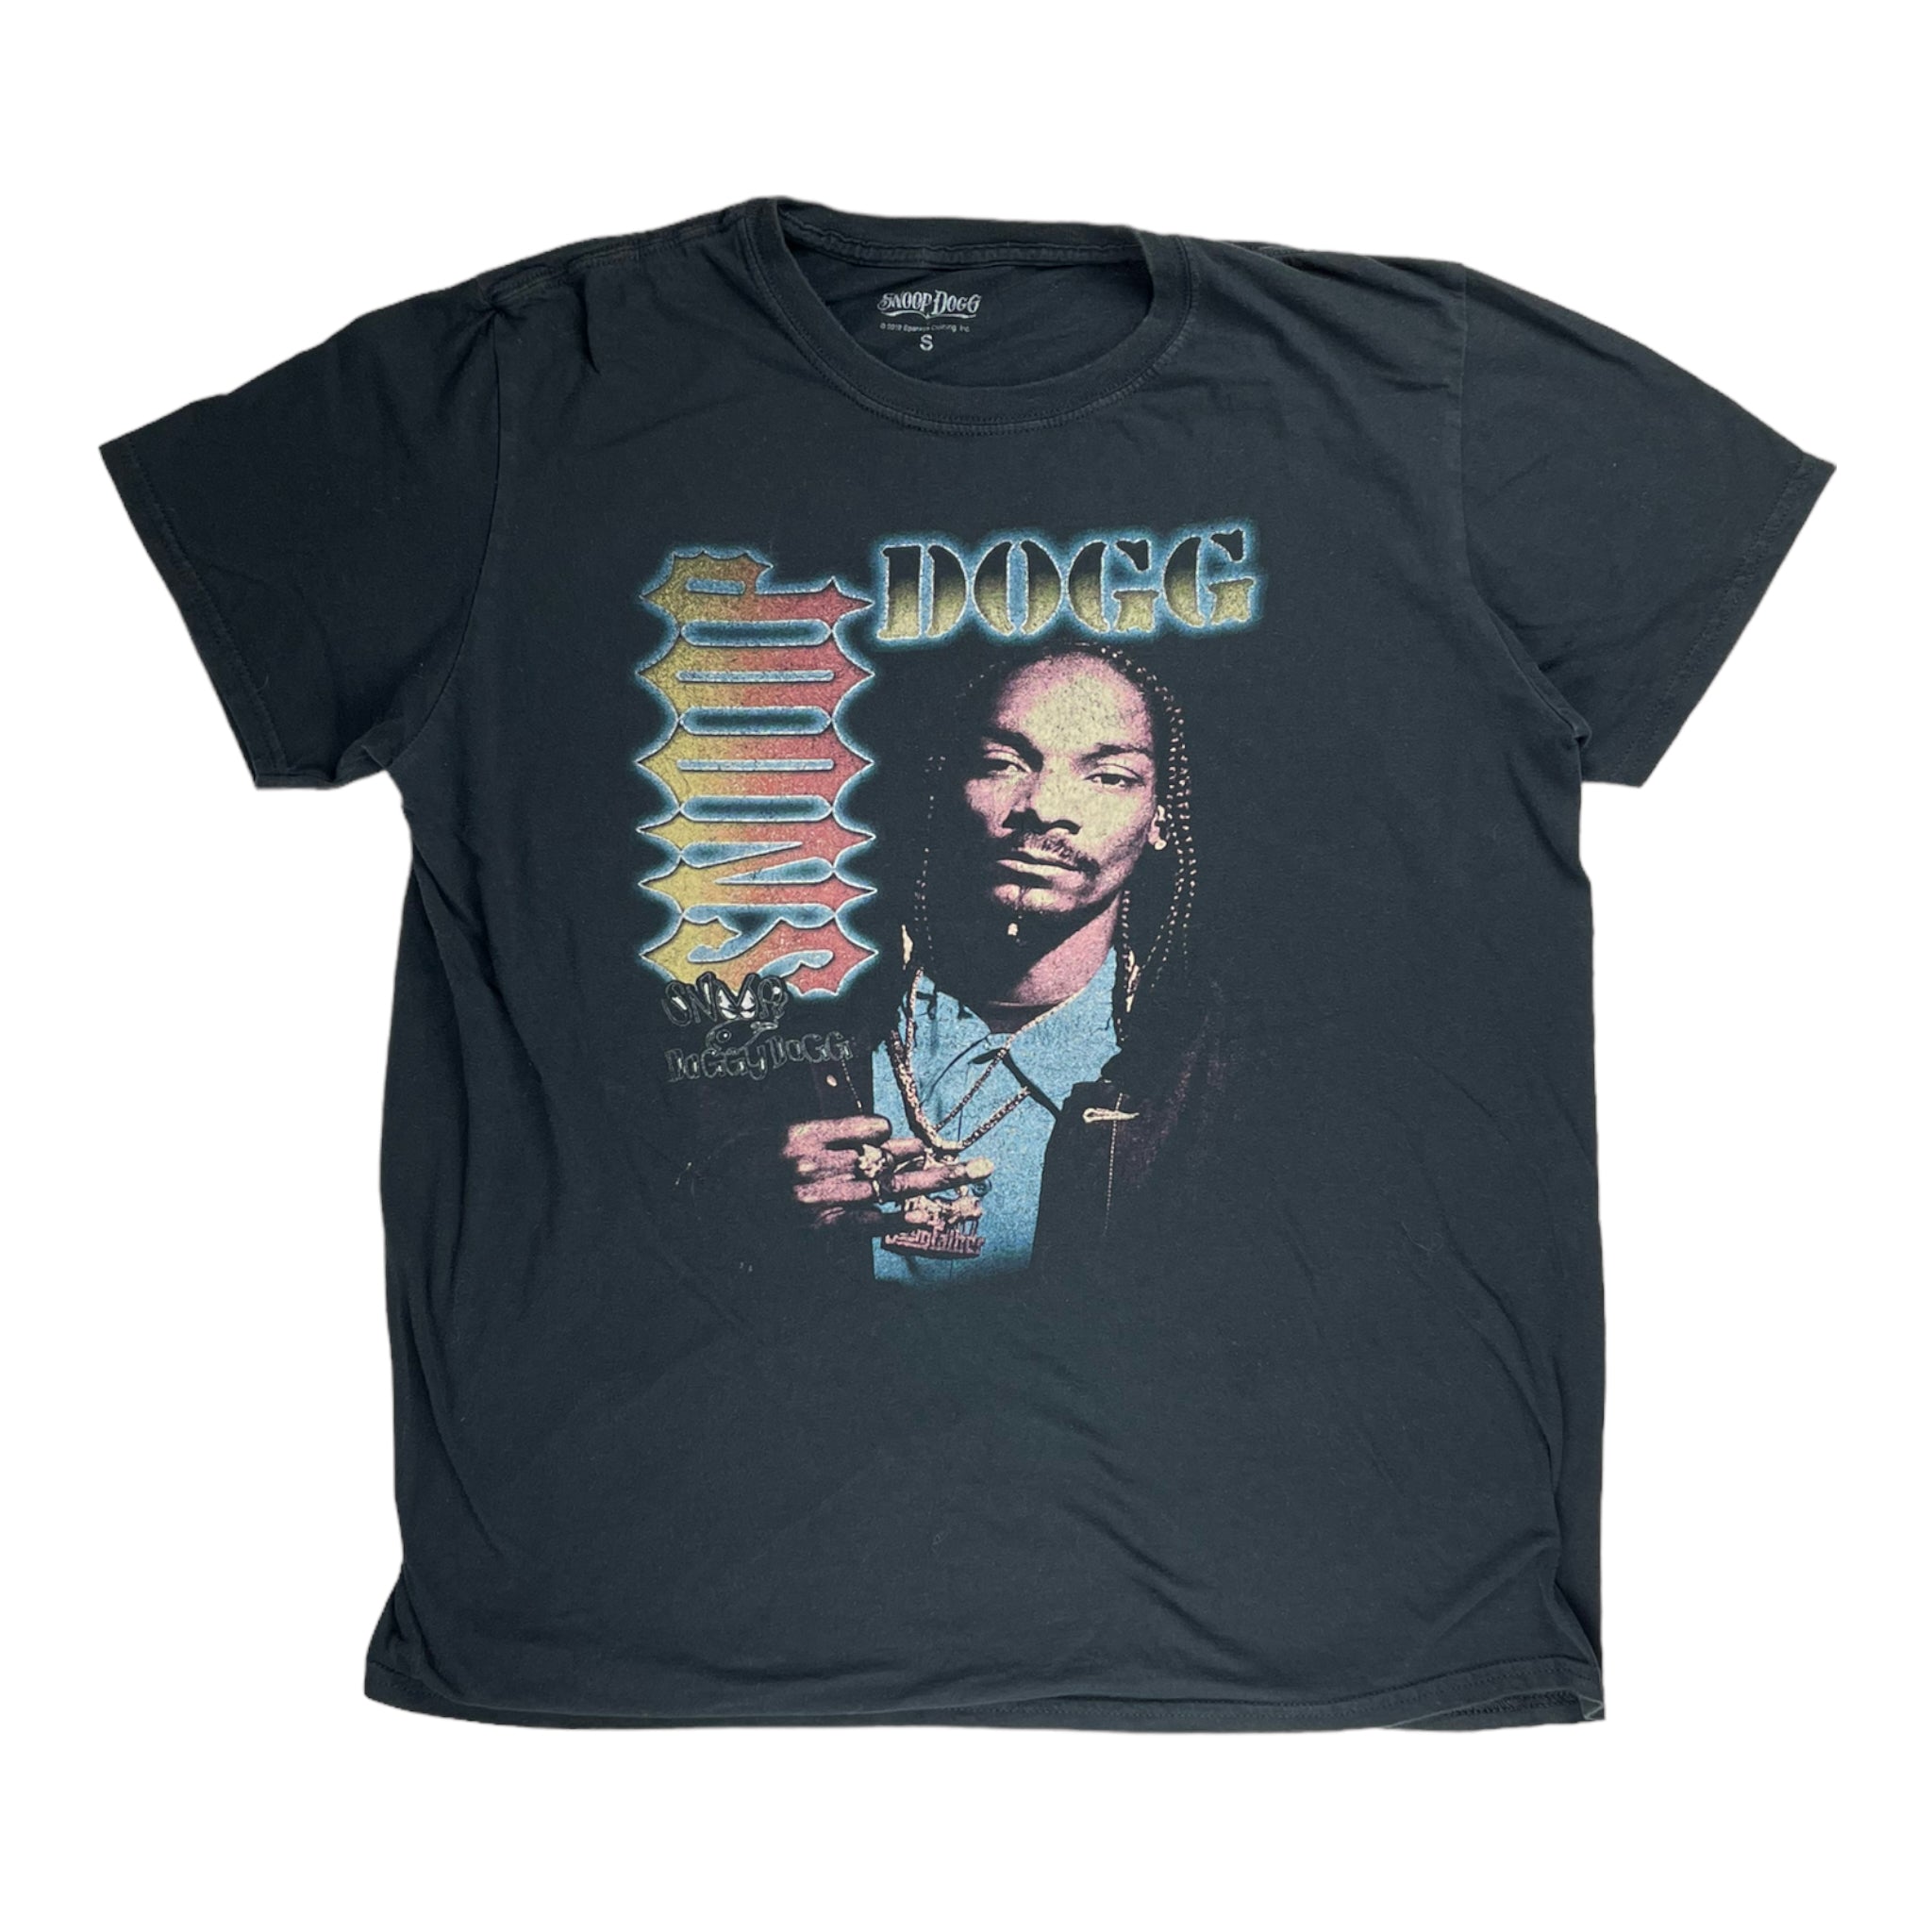 Vintage Snoop Dogg T-shirt